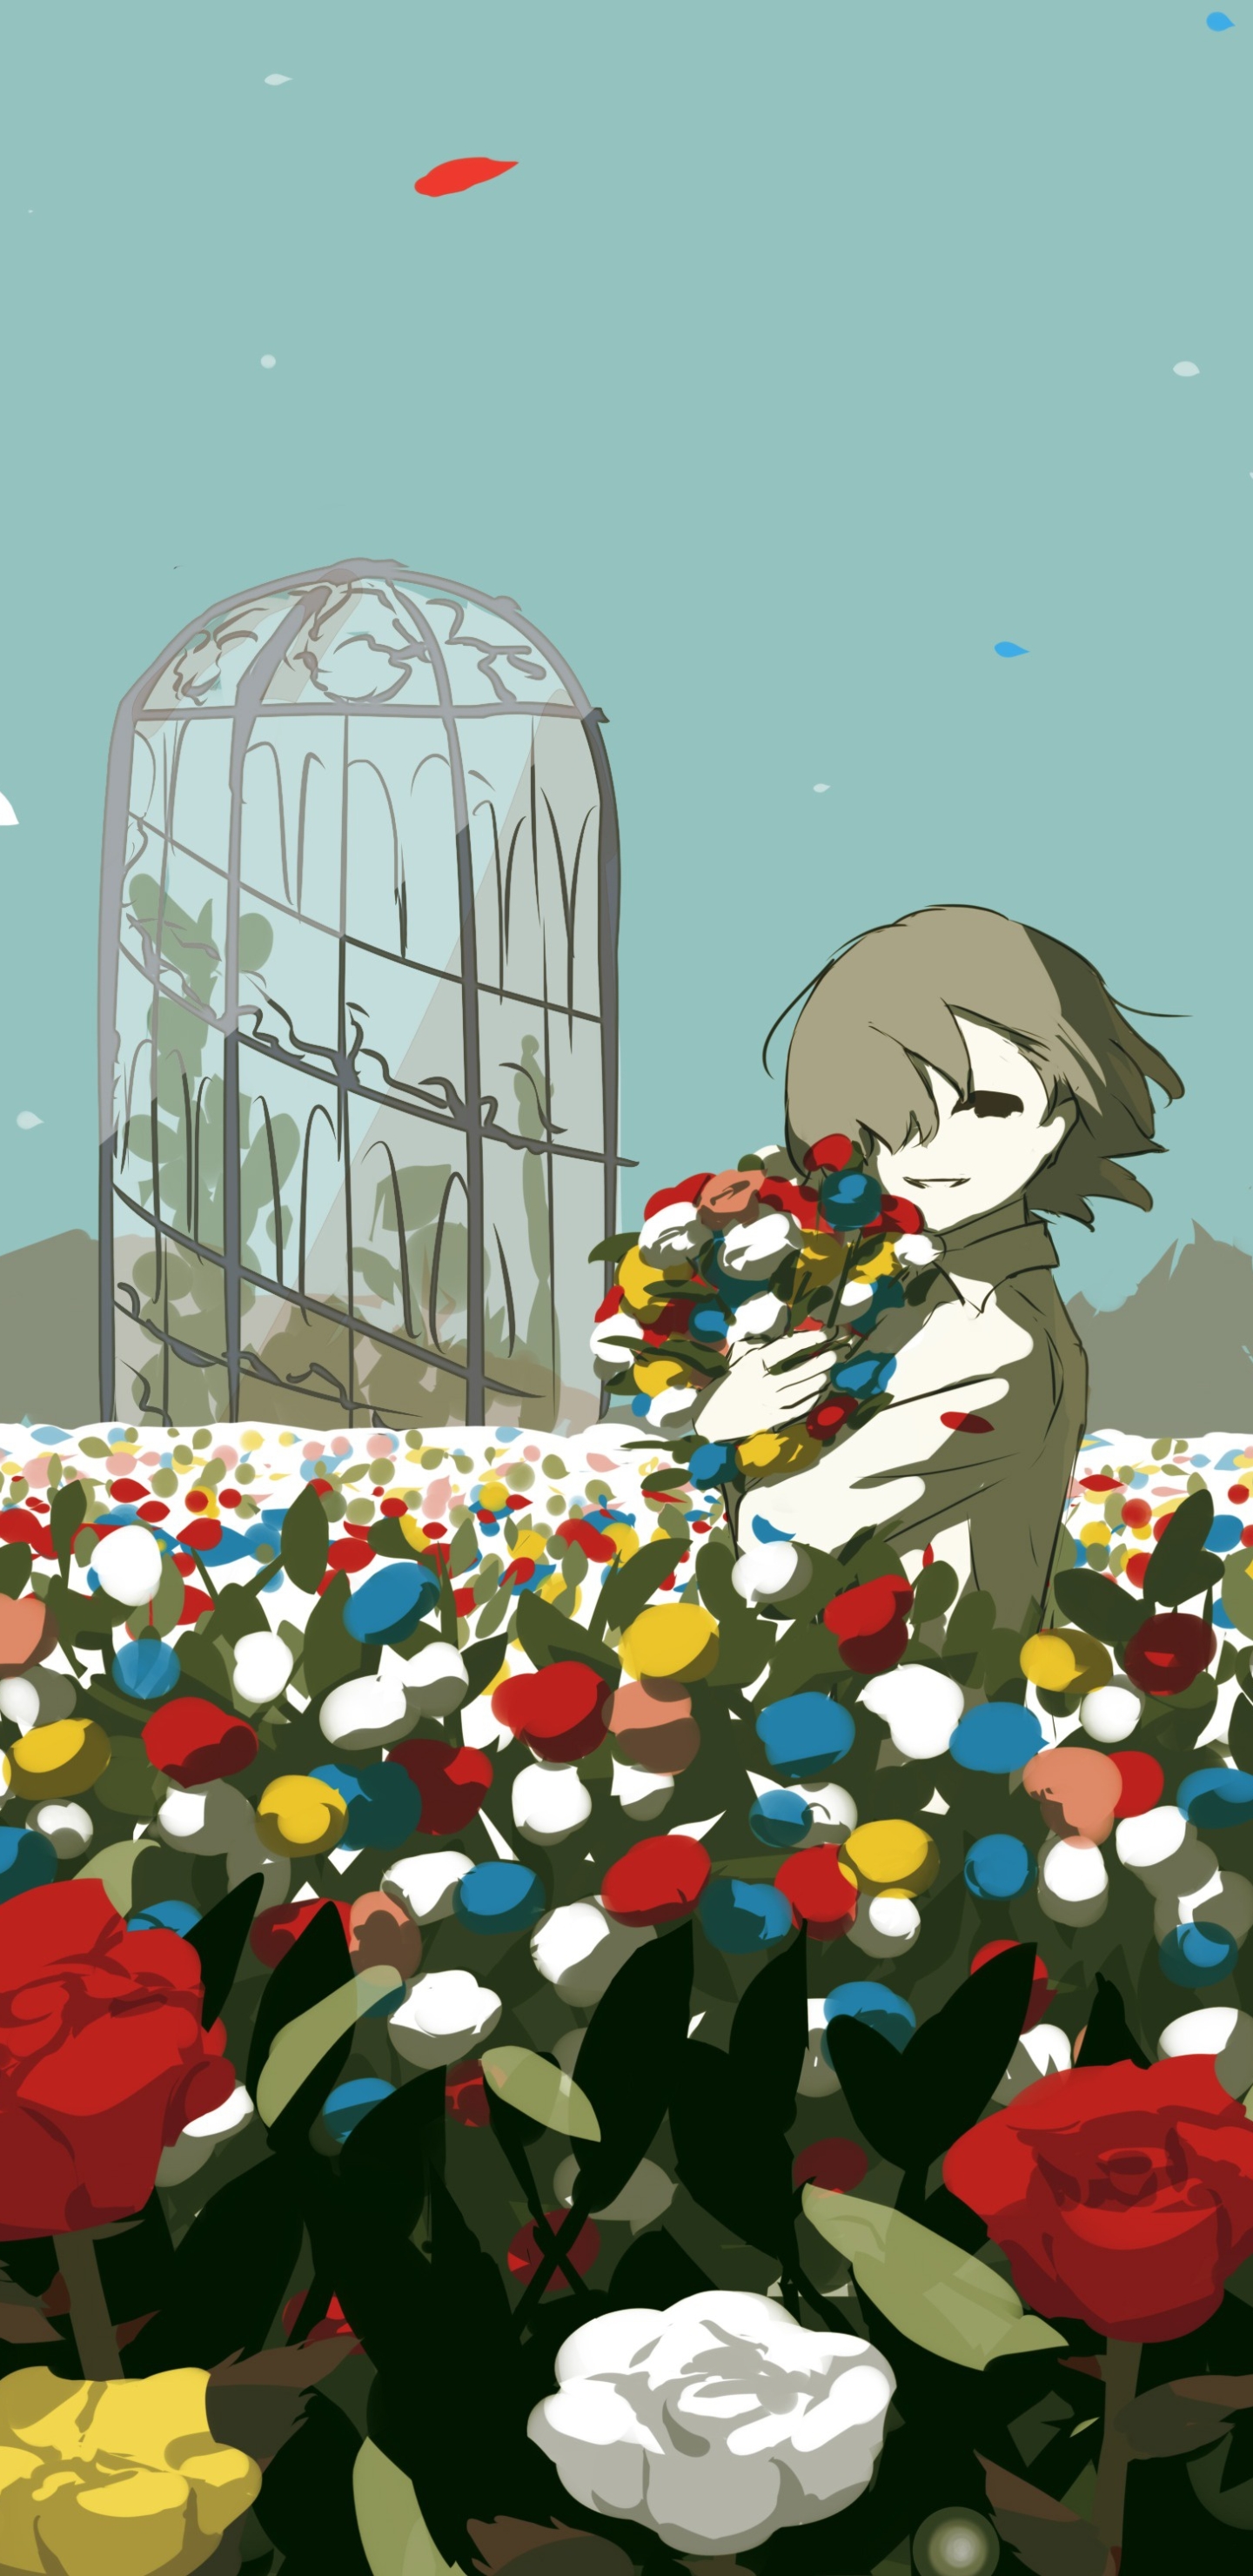 Enjoying A Large Field Of Flowers by avogado6